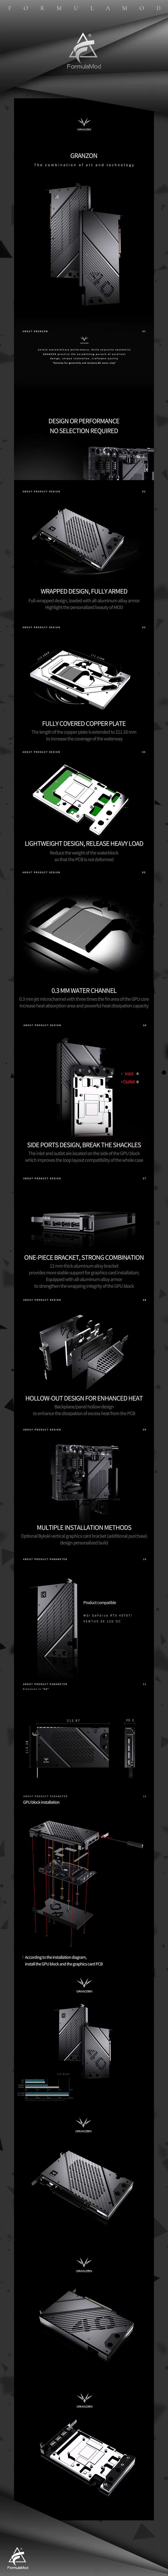 Granzon Full Armor GPU Block For Gigabyte RTX 4090 Windforce / Aorus Xtreme Windforce 24G, Bykski Premium Sub-Brand High Quality Series GPU Water Cooling Cooler, GBN-MS4070TIVES  